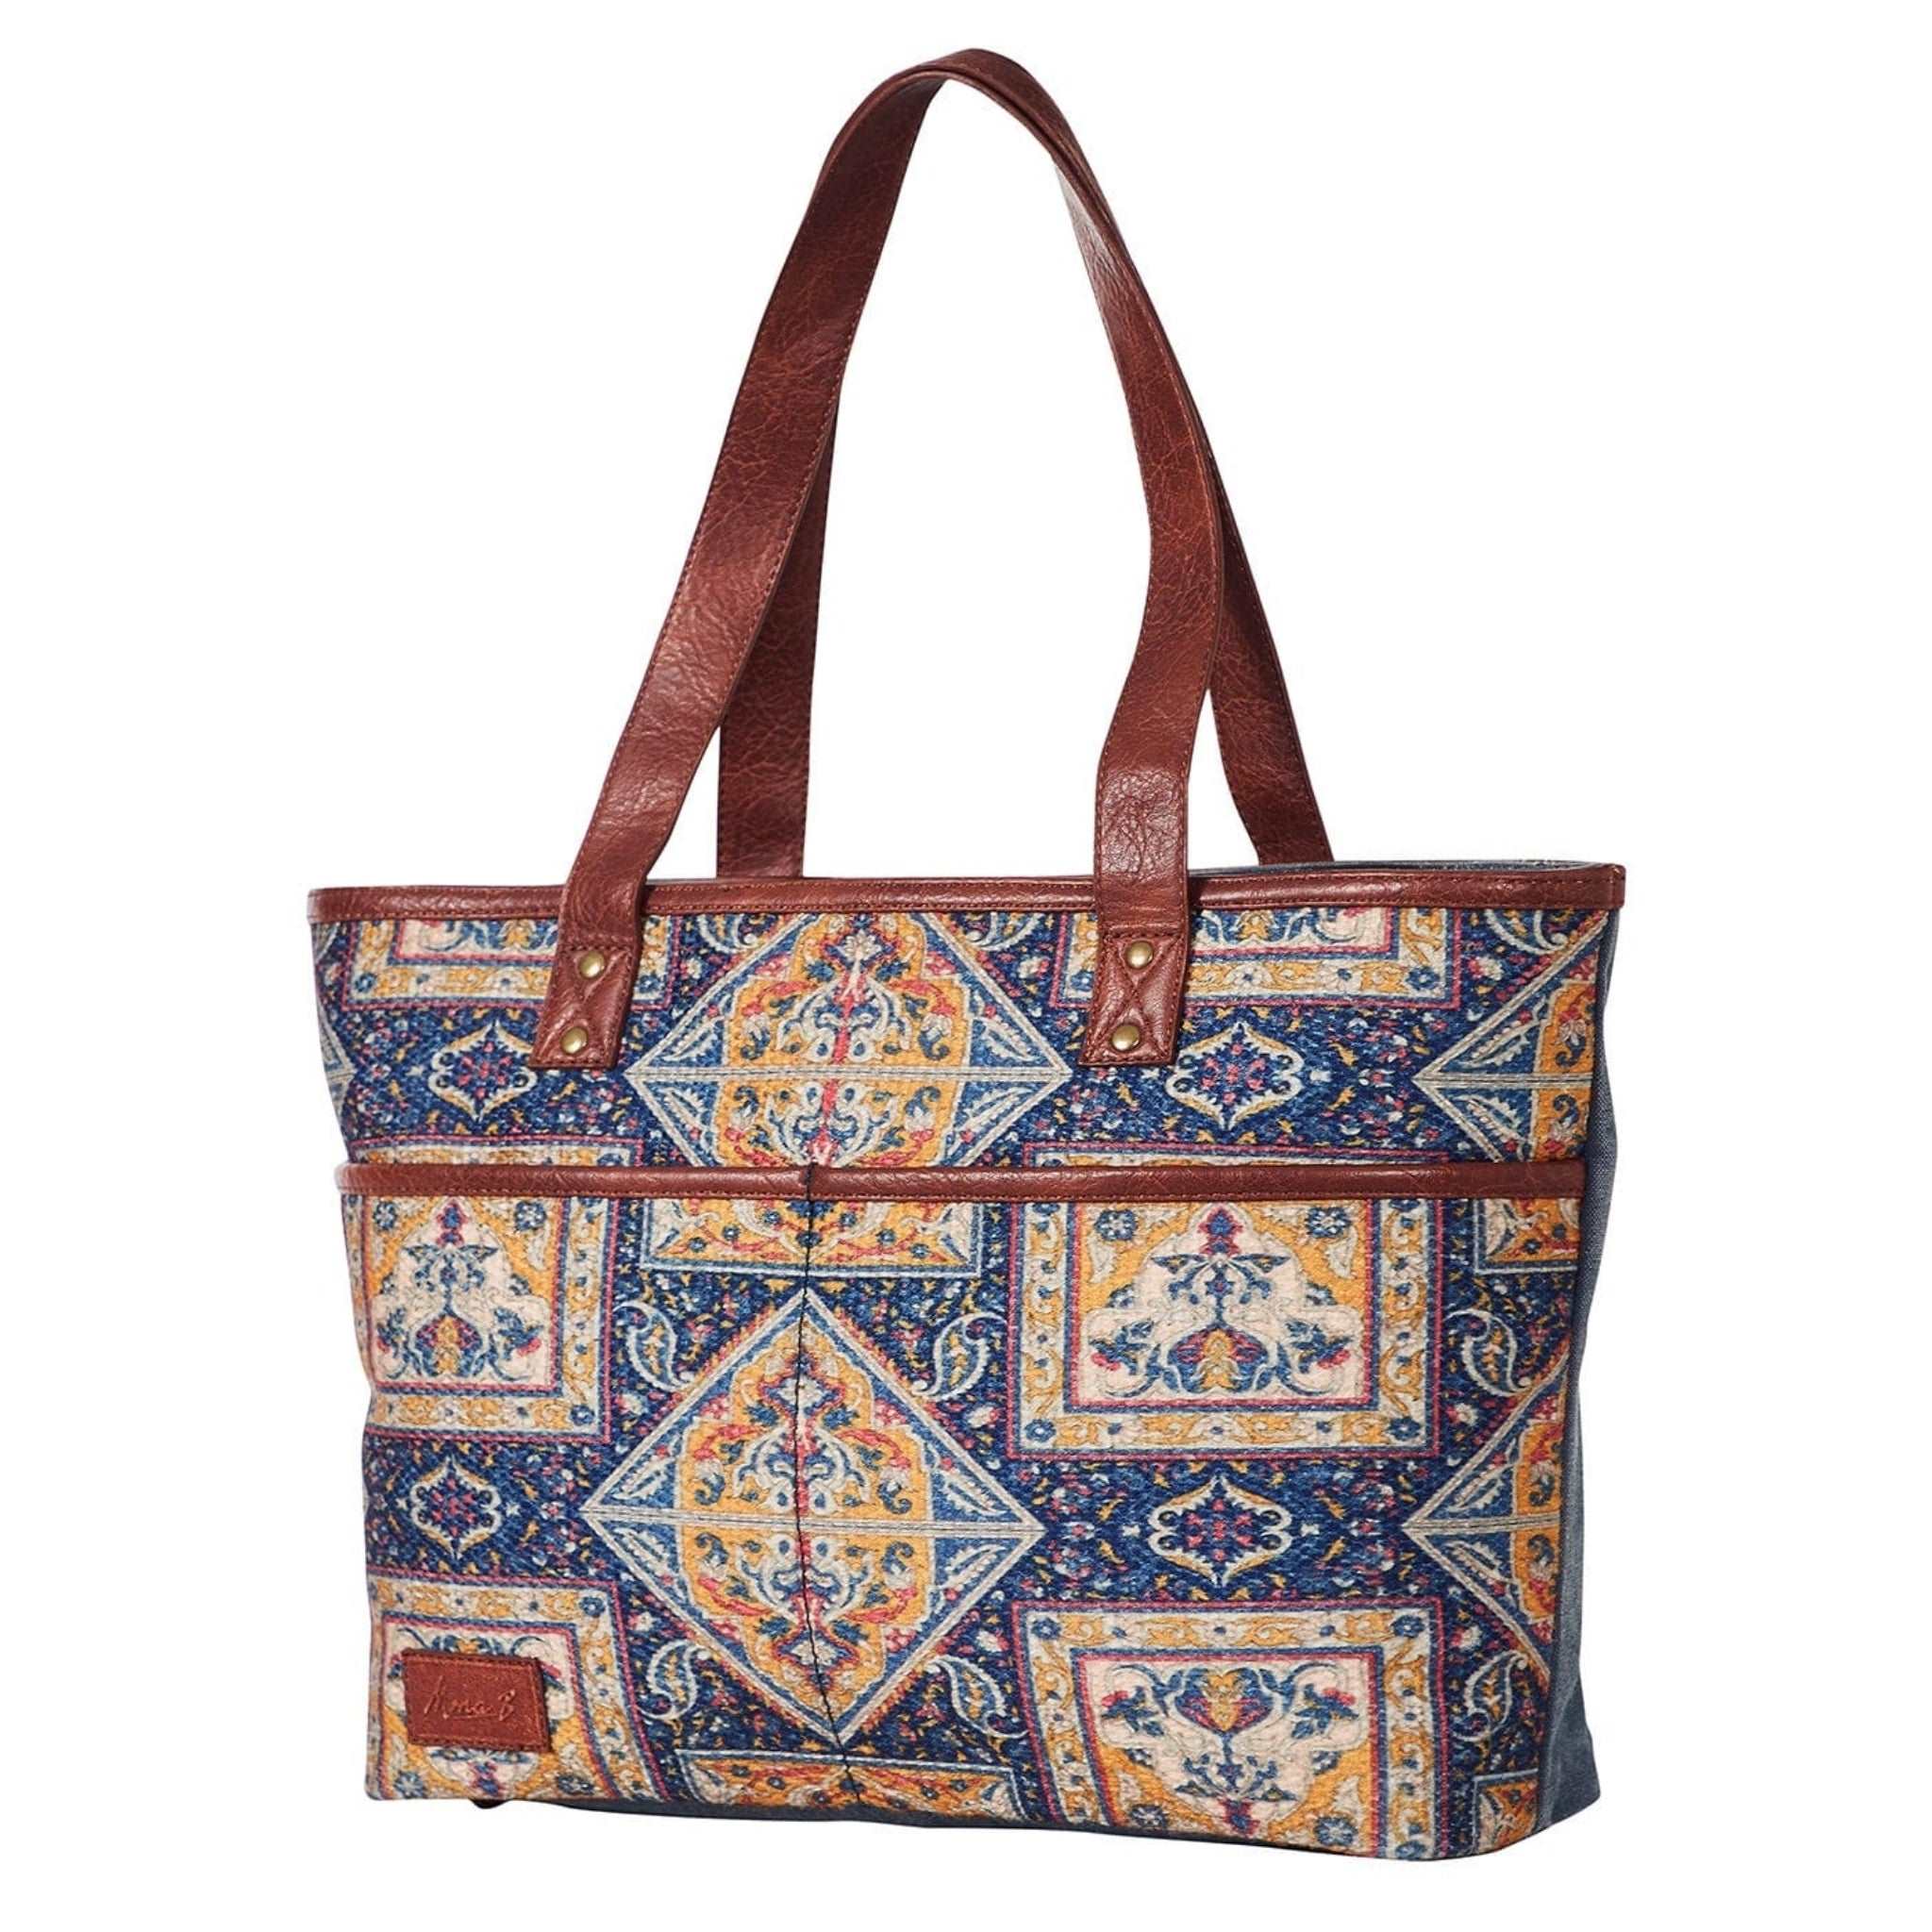 Mona B Canvas Large Vintage Handbag, Shoulder Bag, Zipper Tote Bag for Shopping, Travel with Stylish Design For Women (Chocolate, Kilim) - (M-7005)